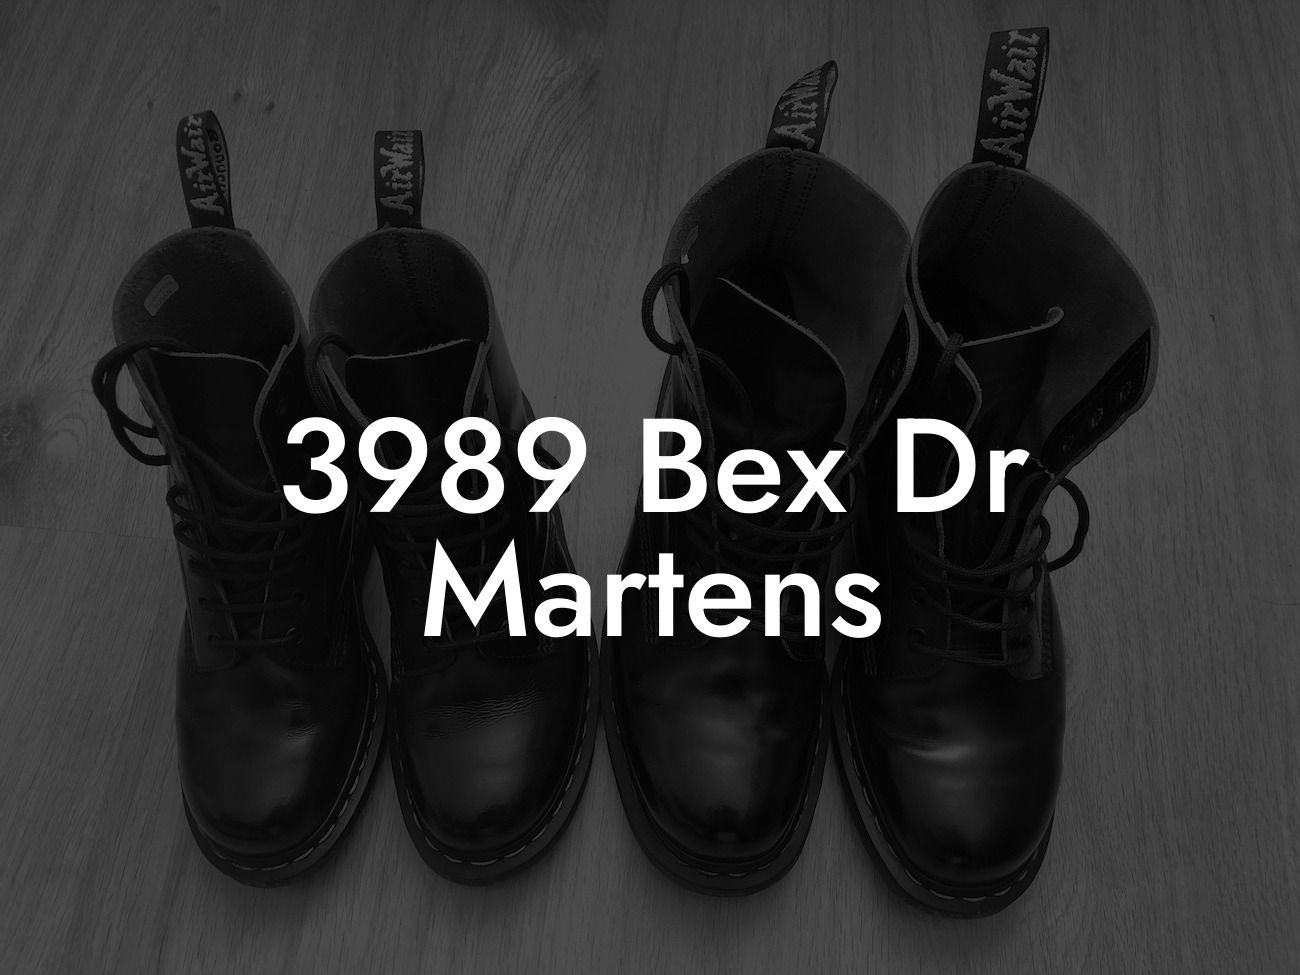 3989 Bex Dr Martens